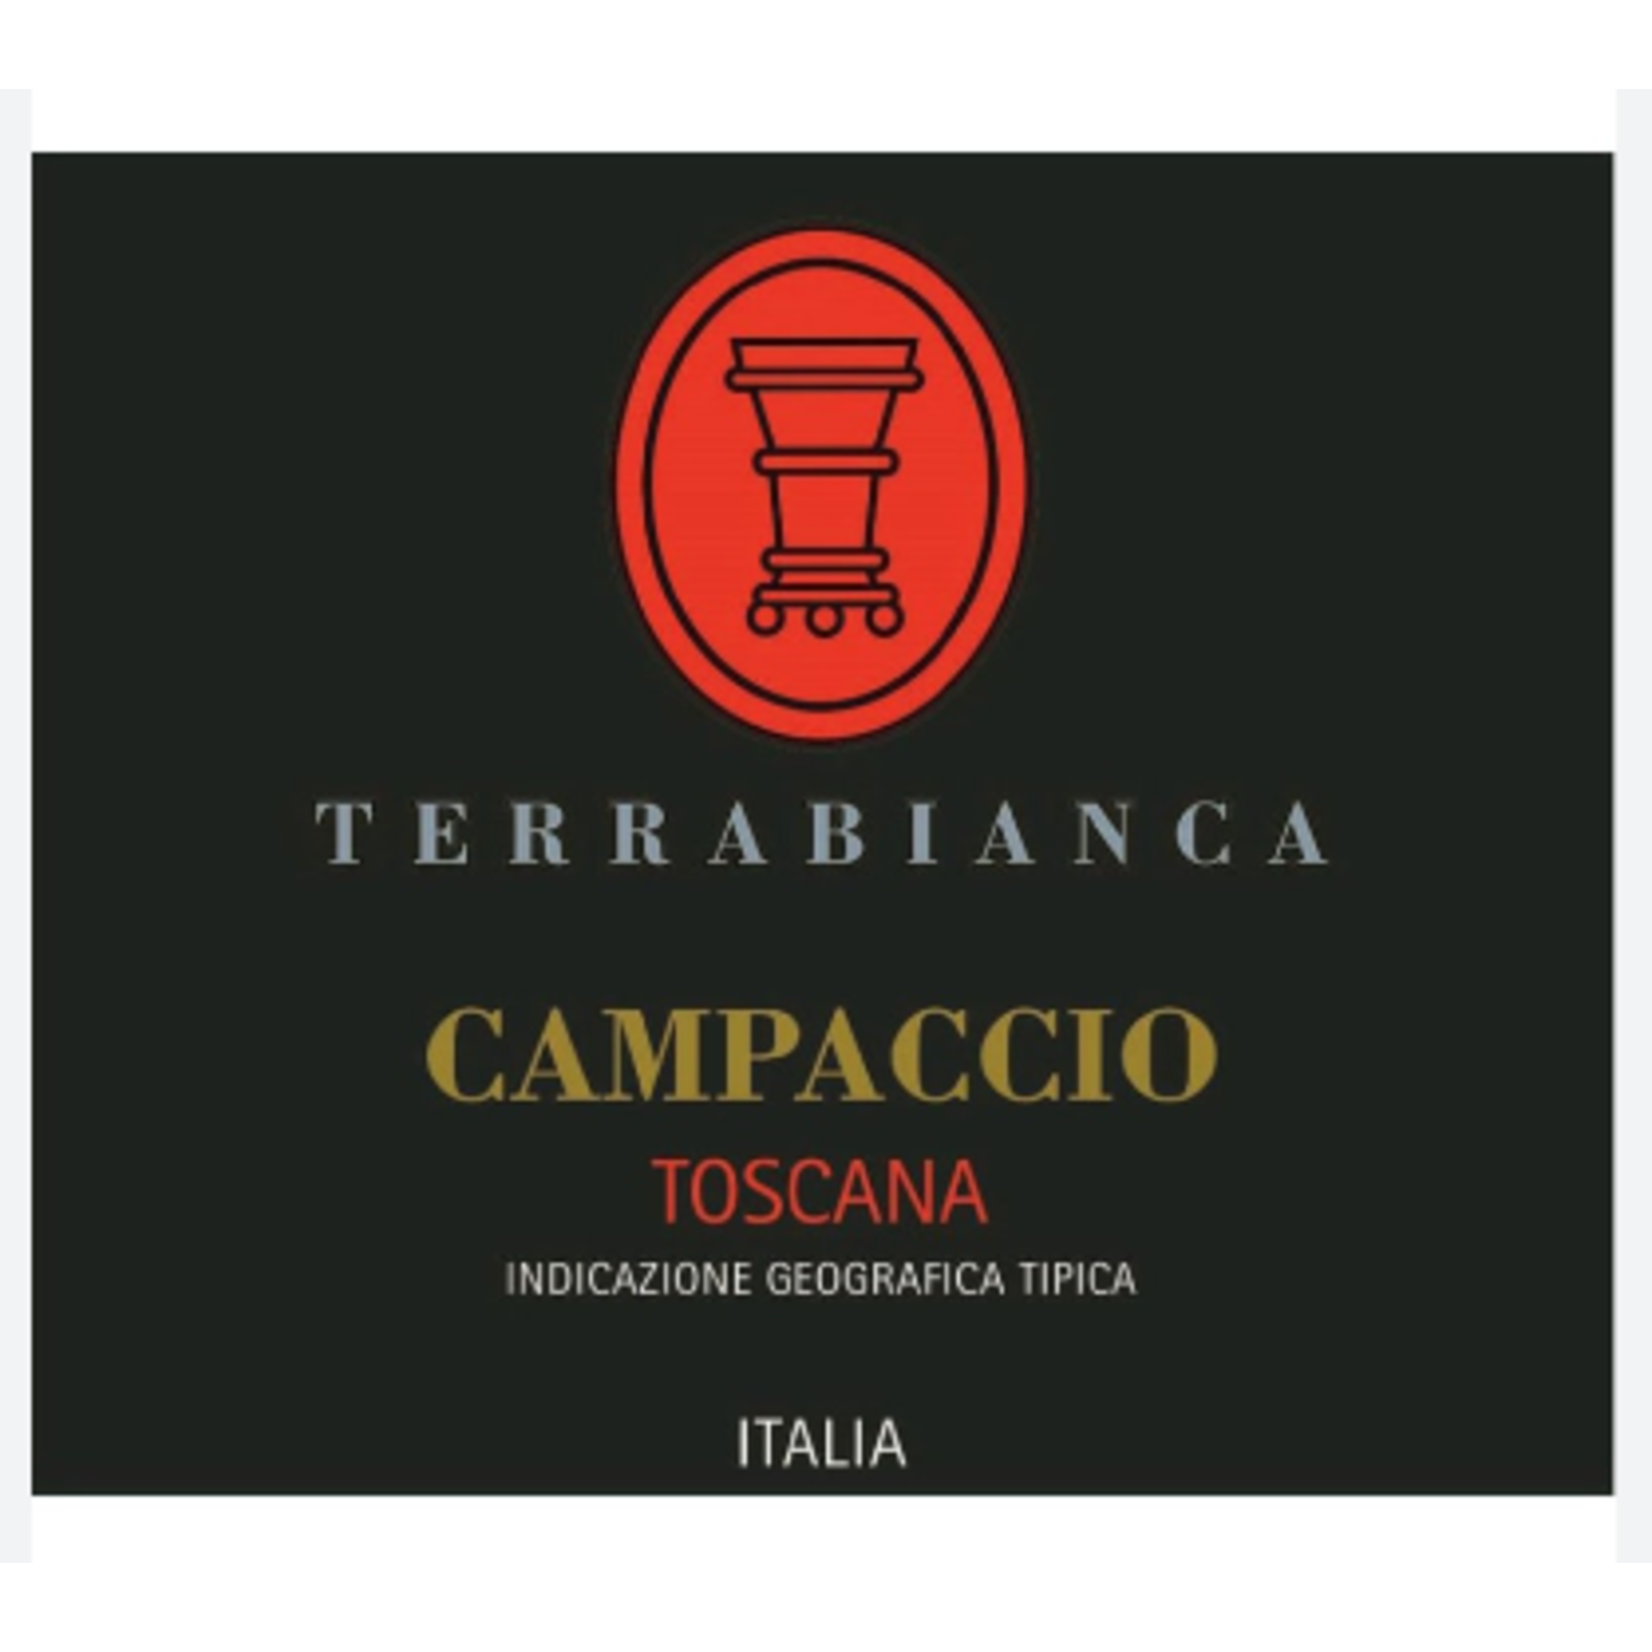 Arillo in Terrabianca Terrabianca Campaccio Toscana Arillo 2019  Italy